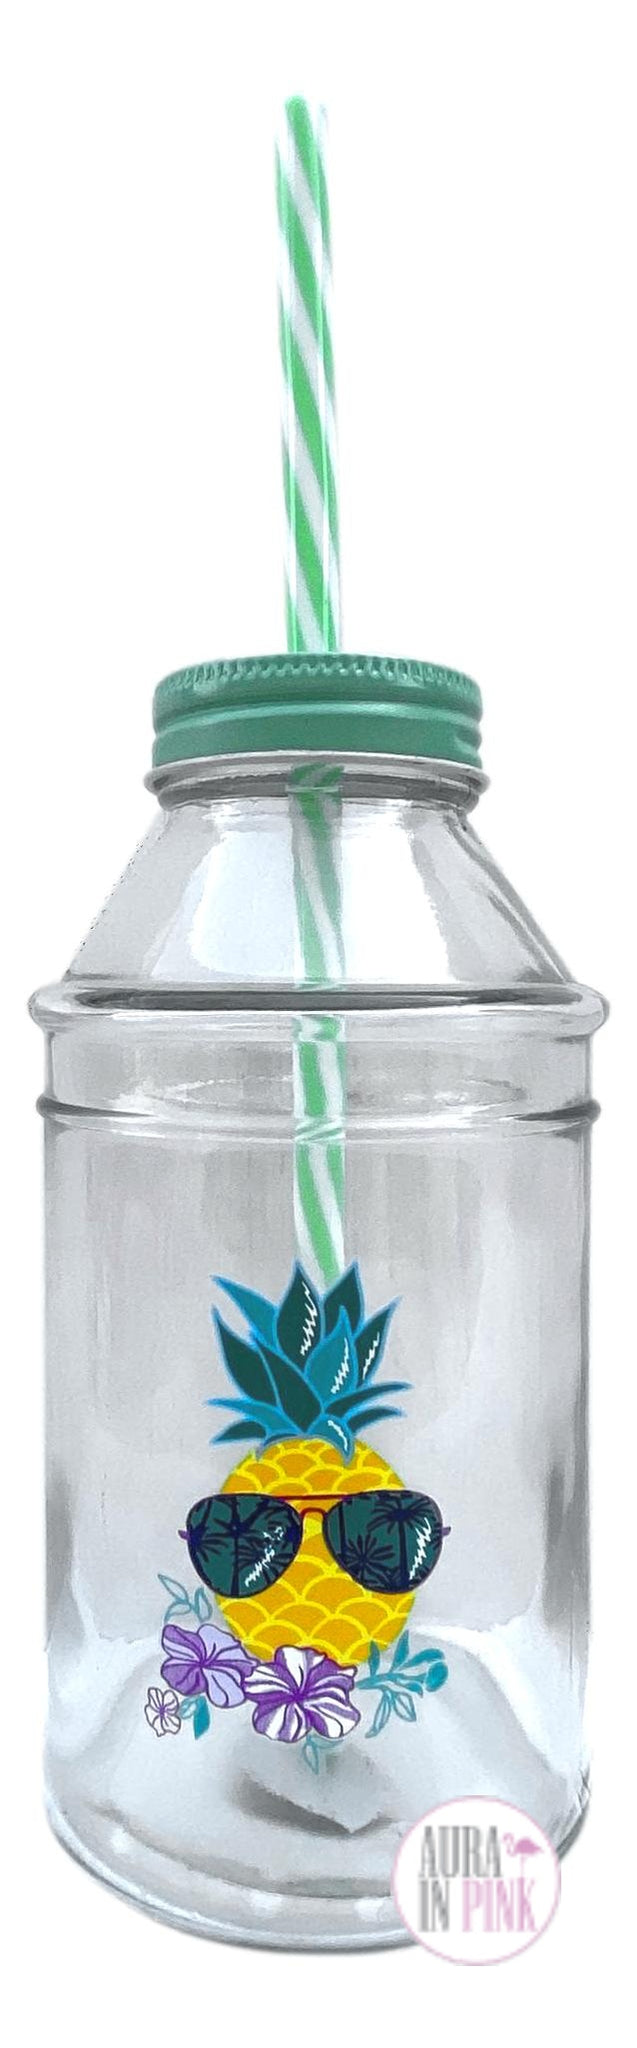 Glass Milk Bottles with Reusable Metal Twist Lids for Beverage